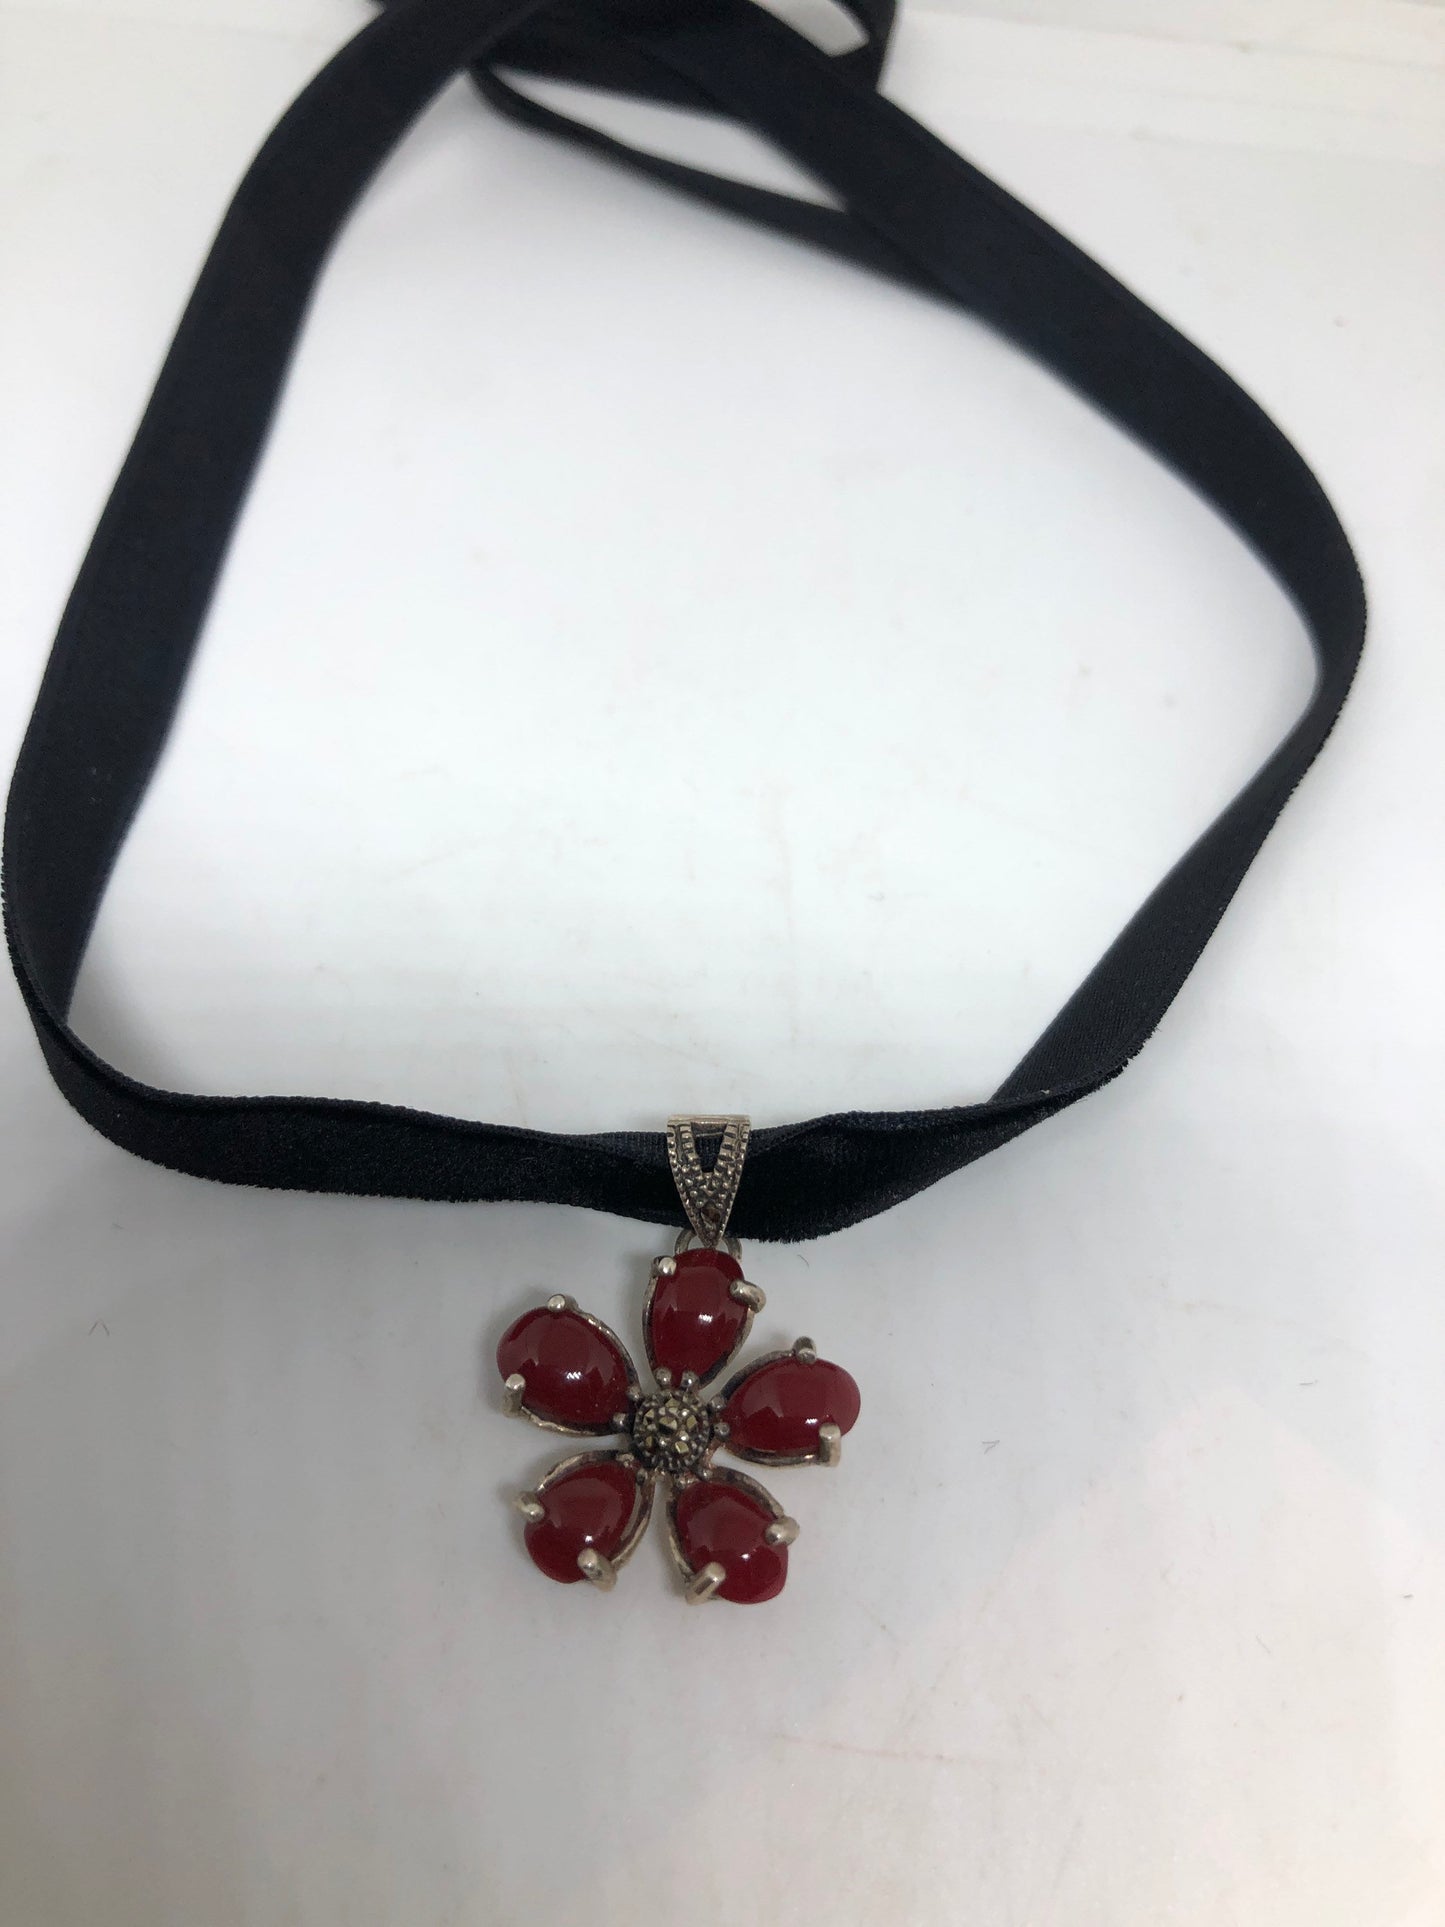 Vintage Flower Necklace, Sterling Silver Marcasite Carnelian Choker